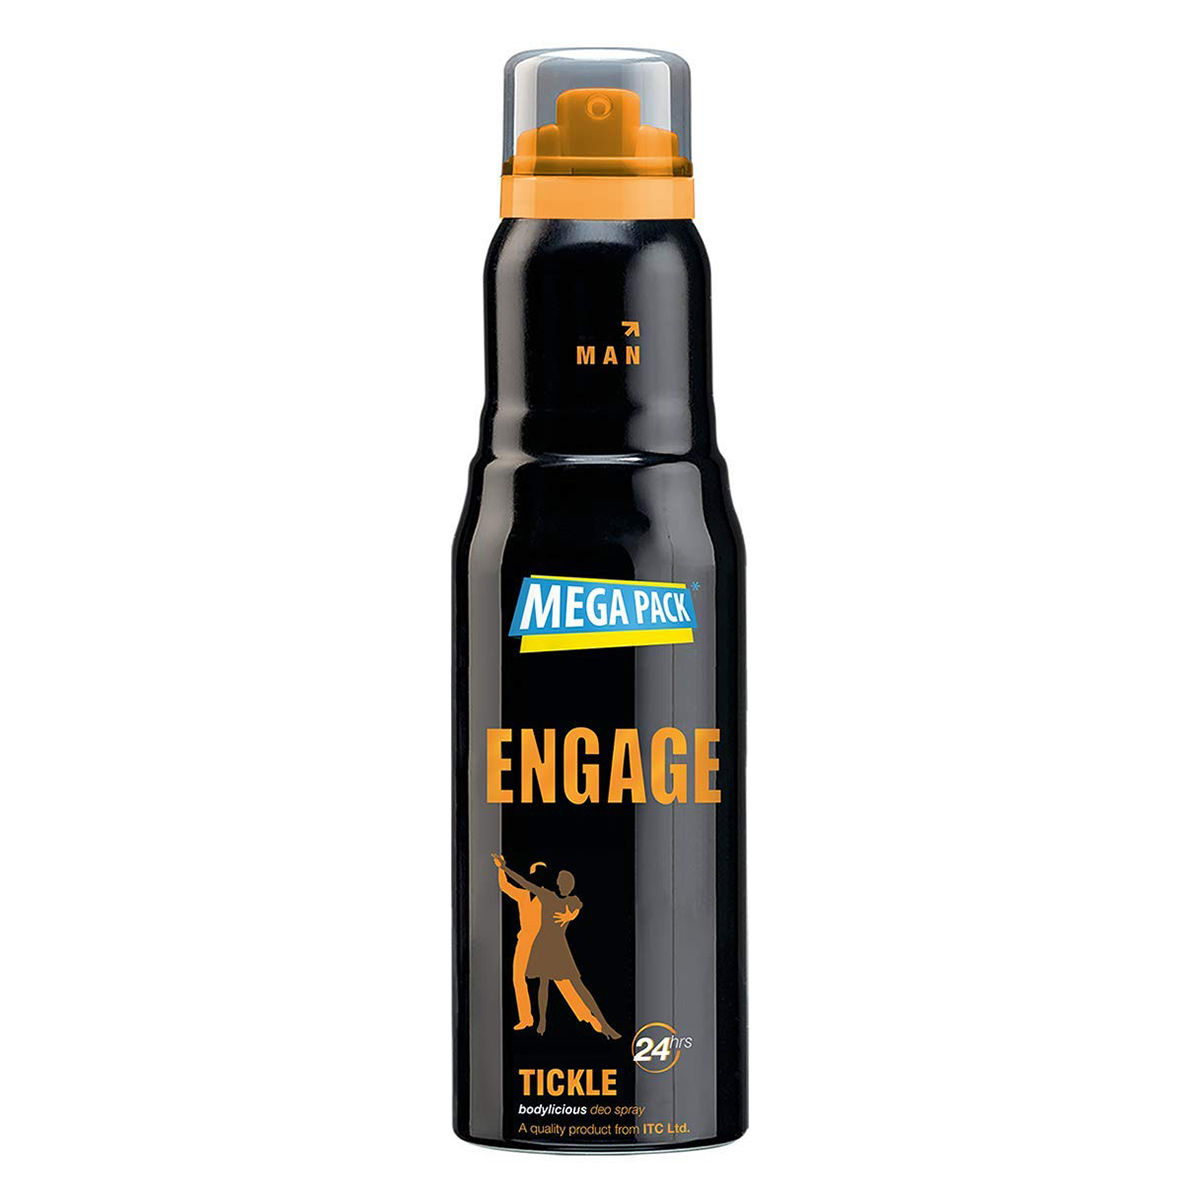 Buy Engage Tickle Deodorant Body Spray for Men, 220 ml Online